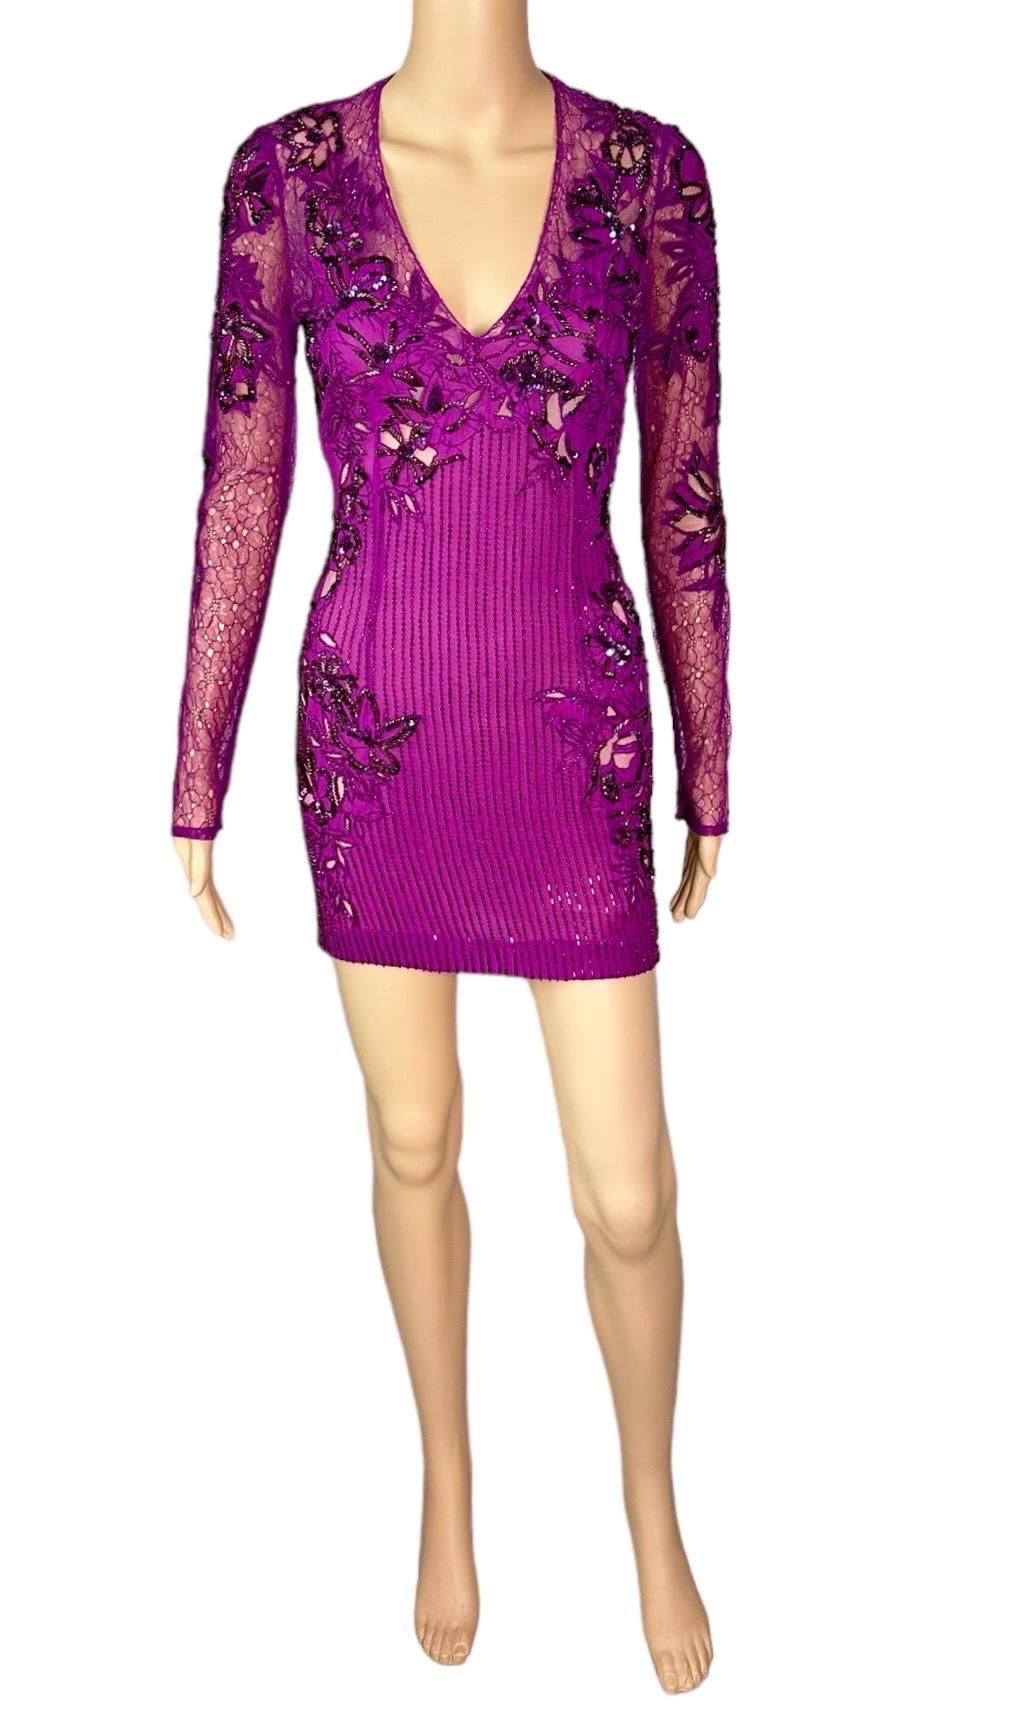 Roberto Cavalli Unworn S/S 2016 Embellished Sheer Lace Mesh Mini Dress For Sale 3